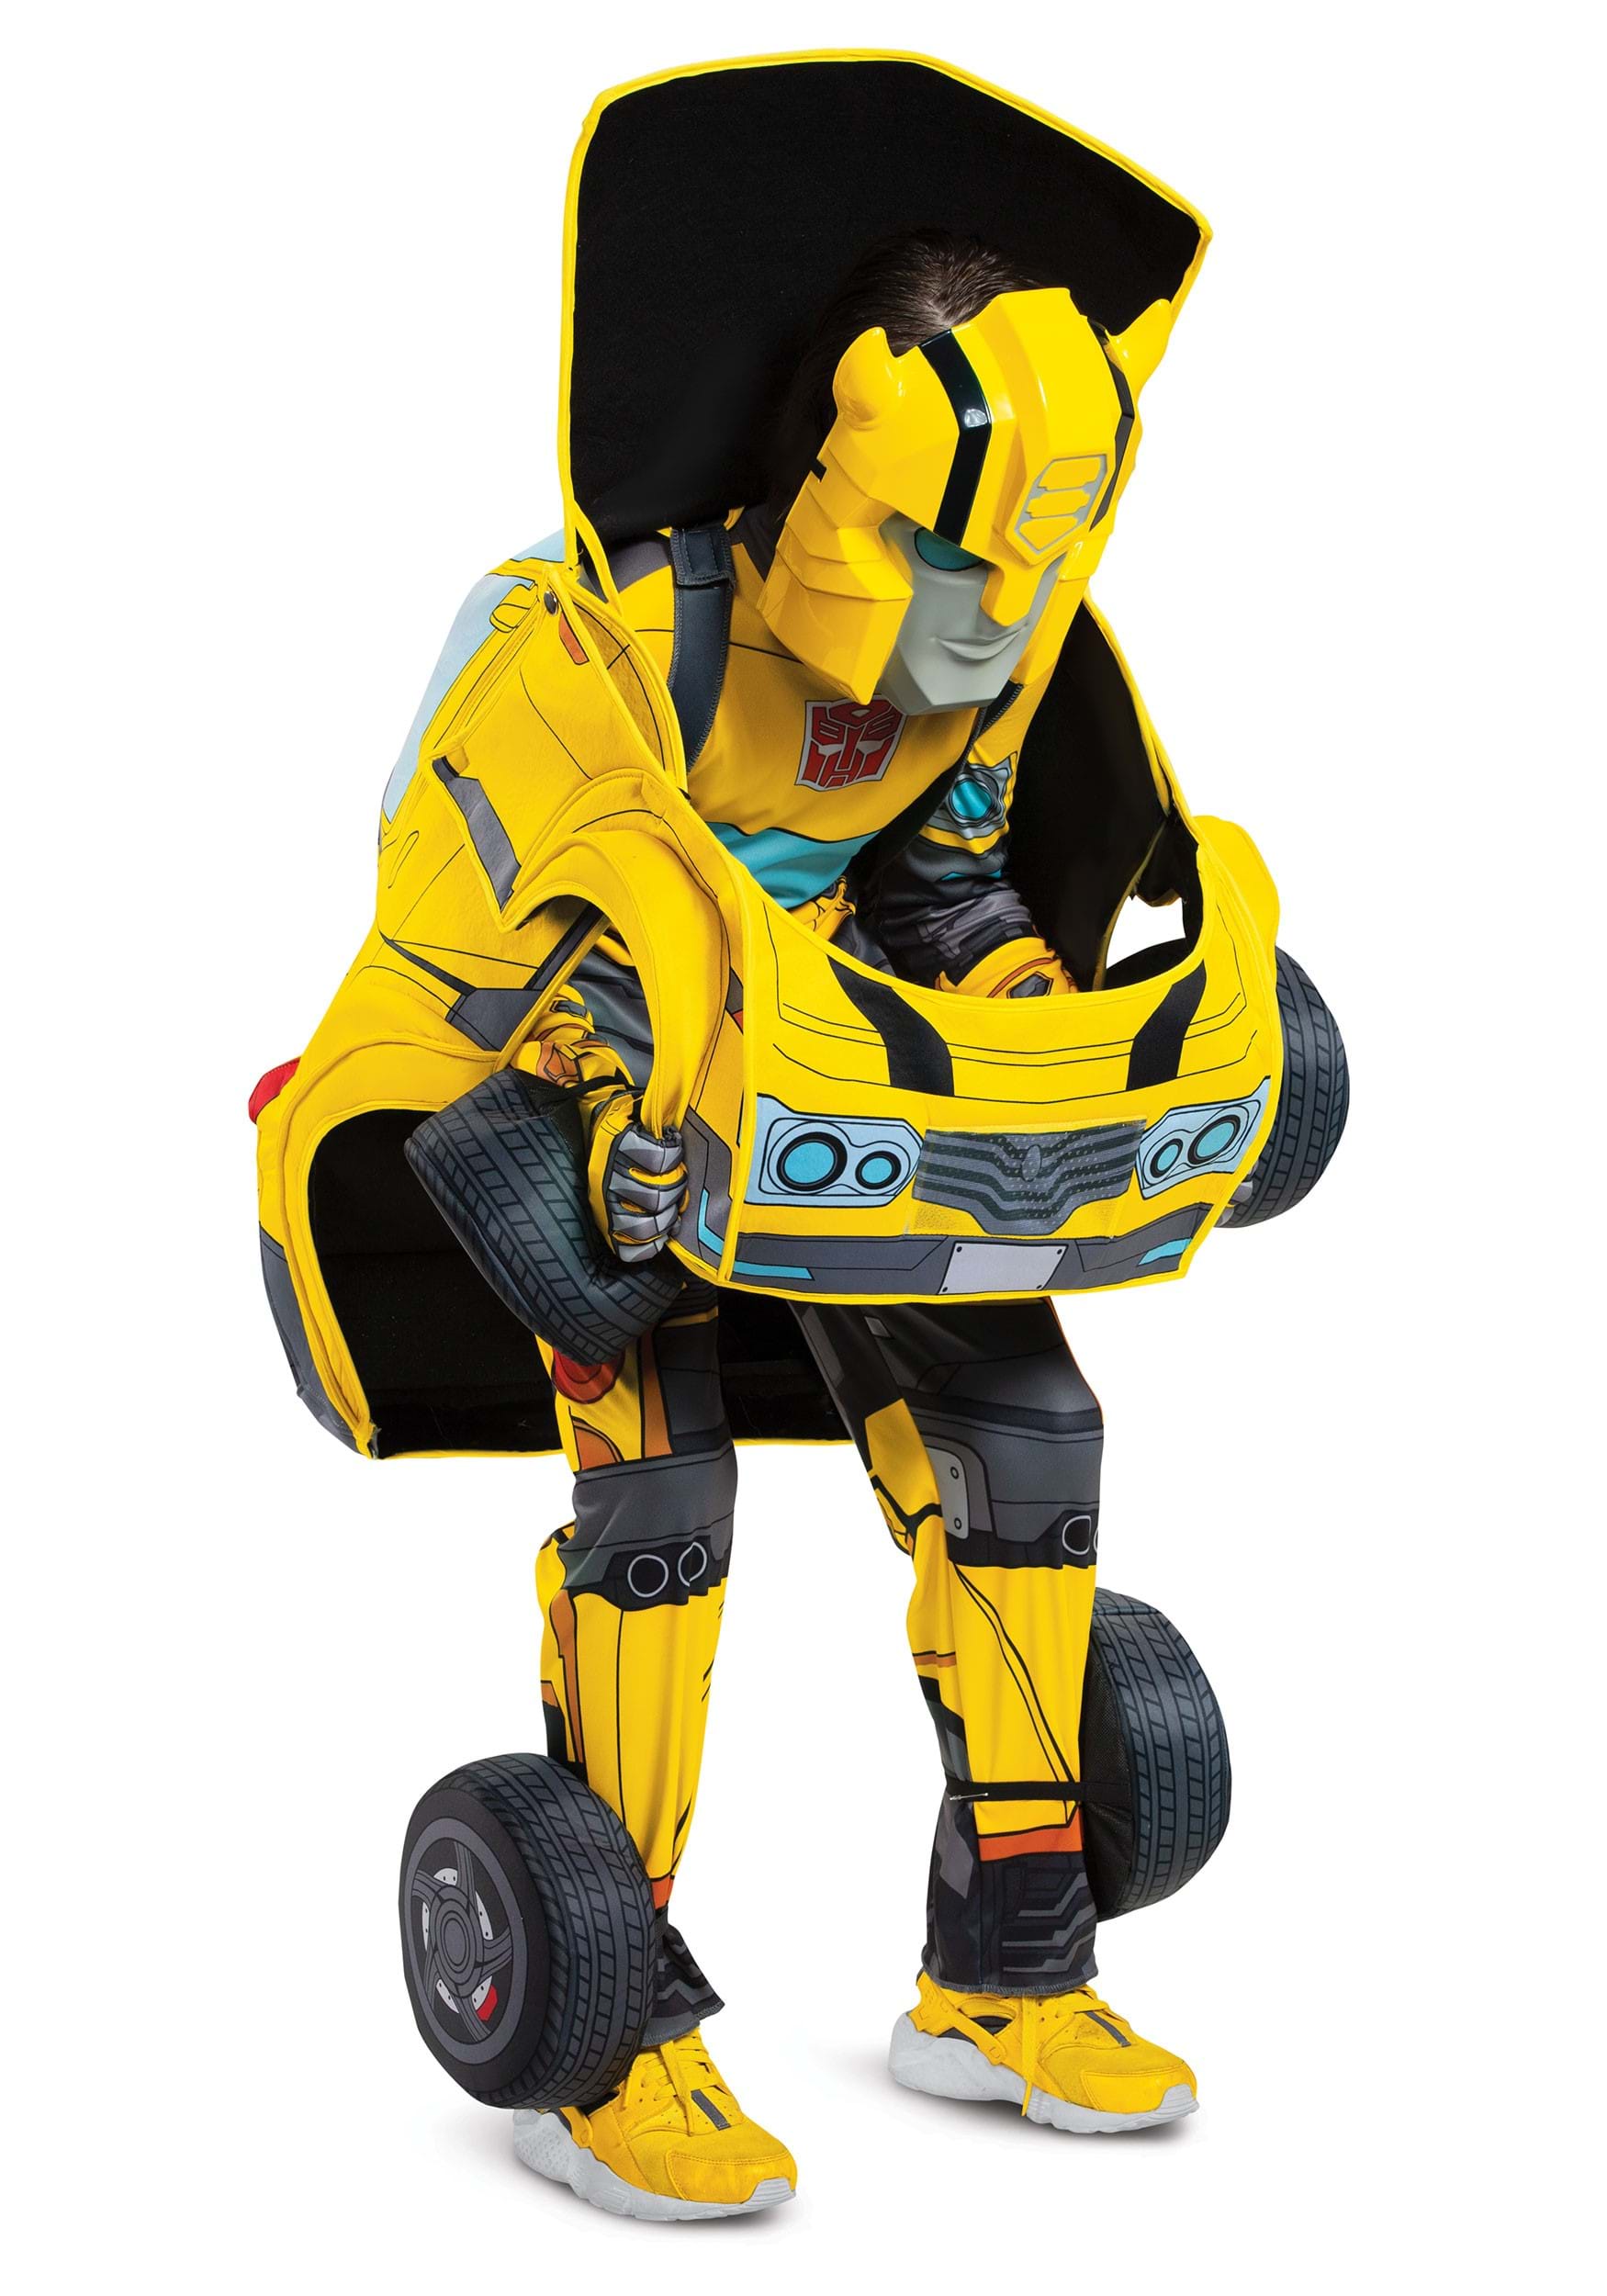 Disguise Bumblebee Movie Toddler Bumblebee Costume 